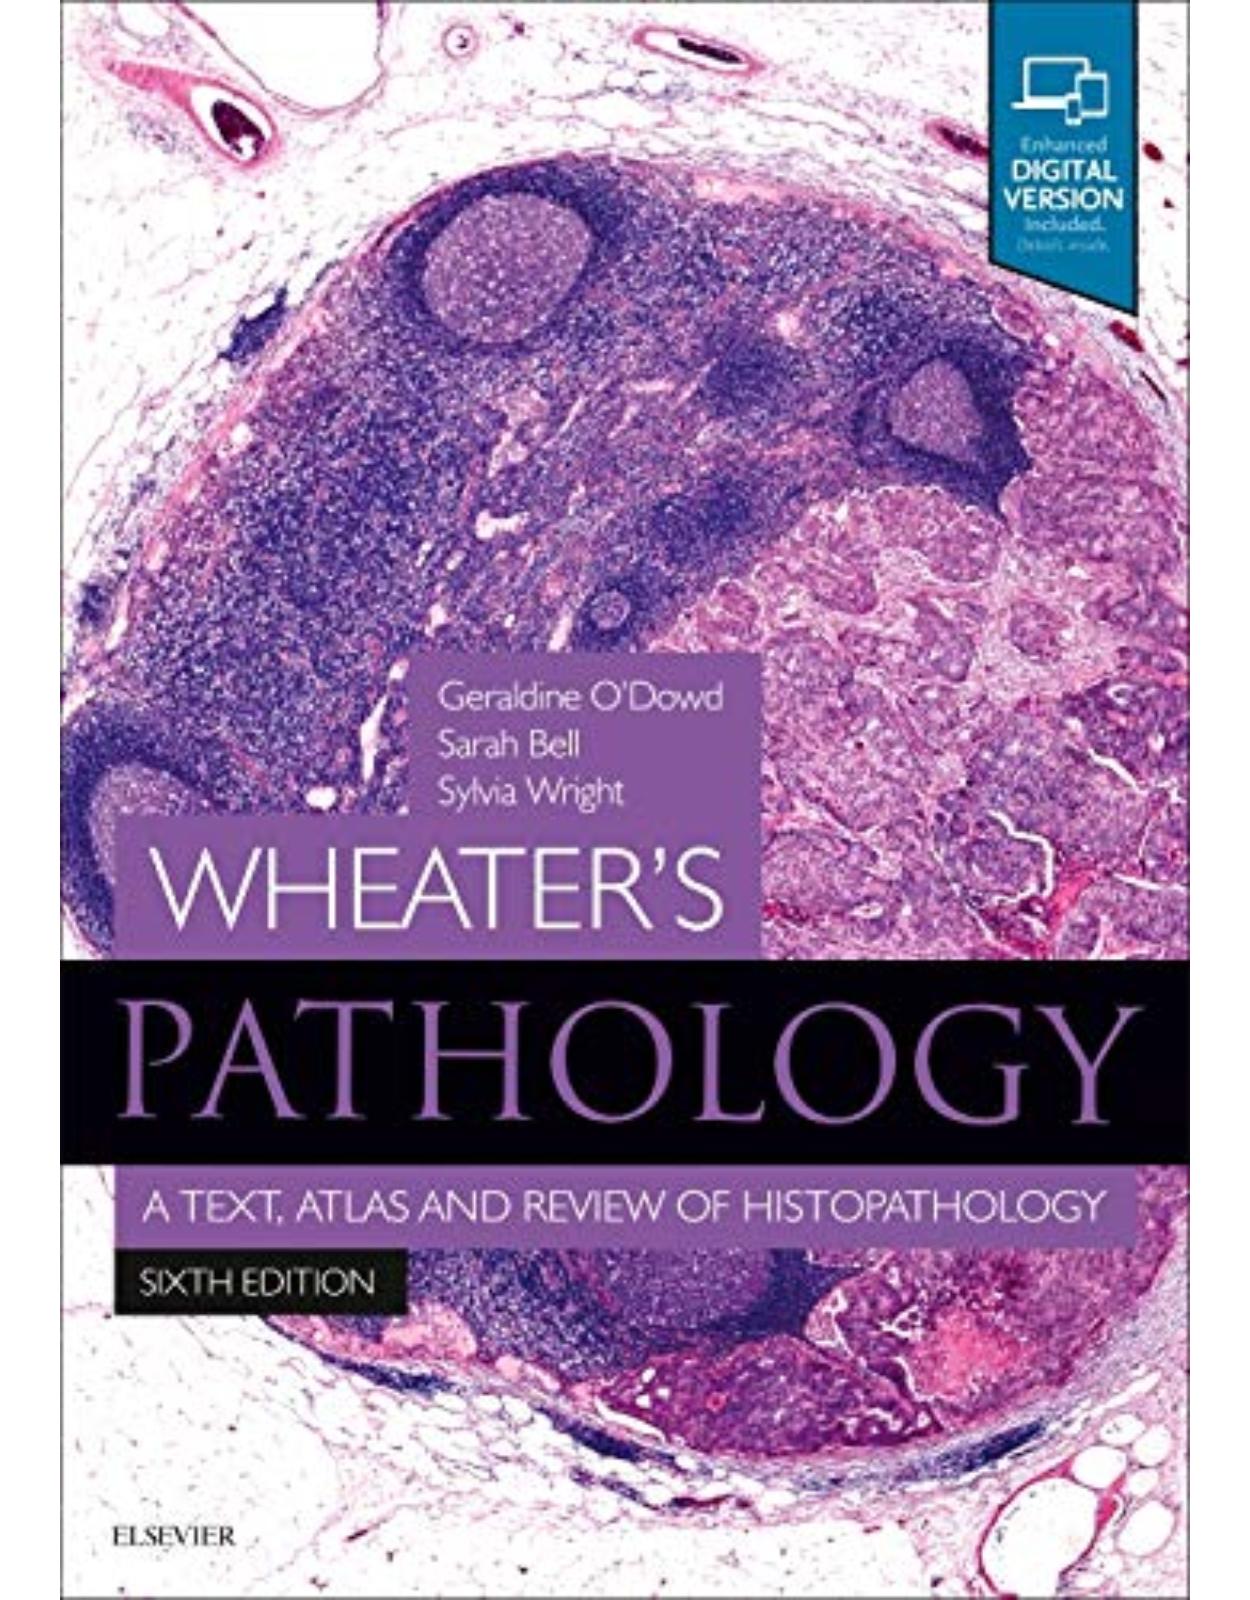 Wheater’s Pathology: A Text, Atlas and Review of Histopathology, 6e